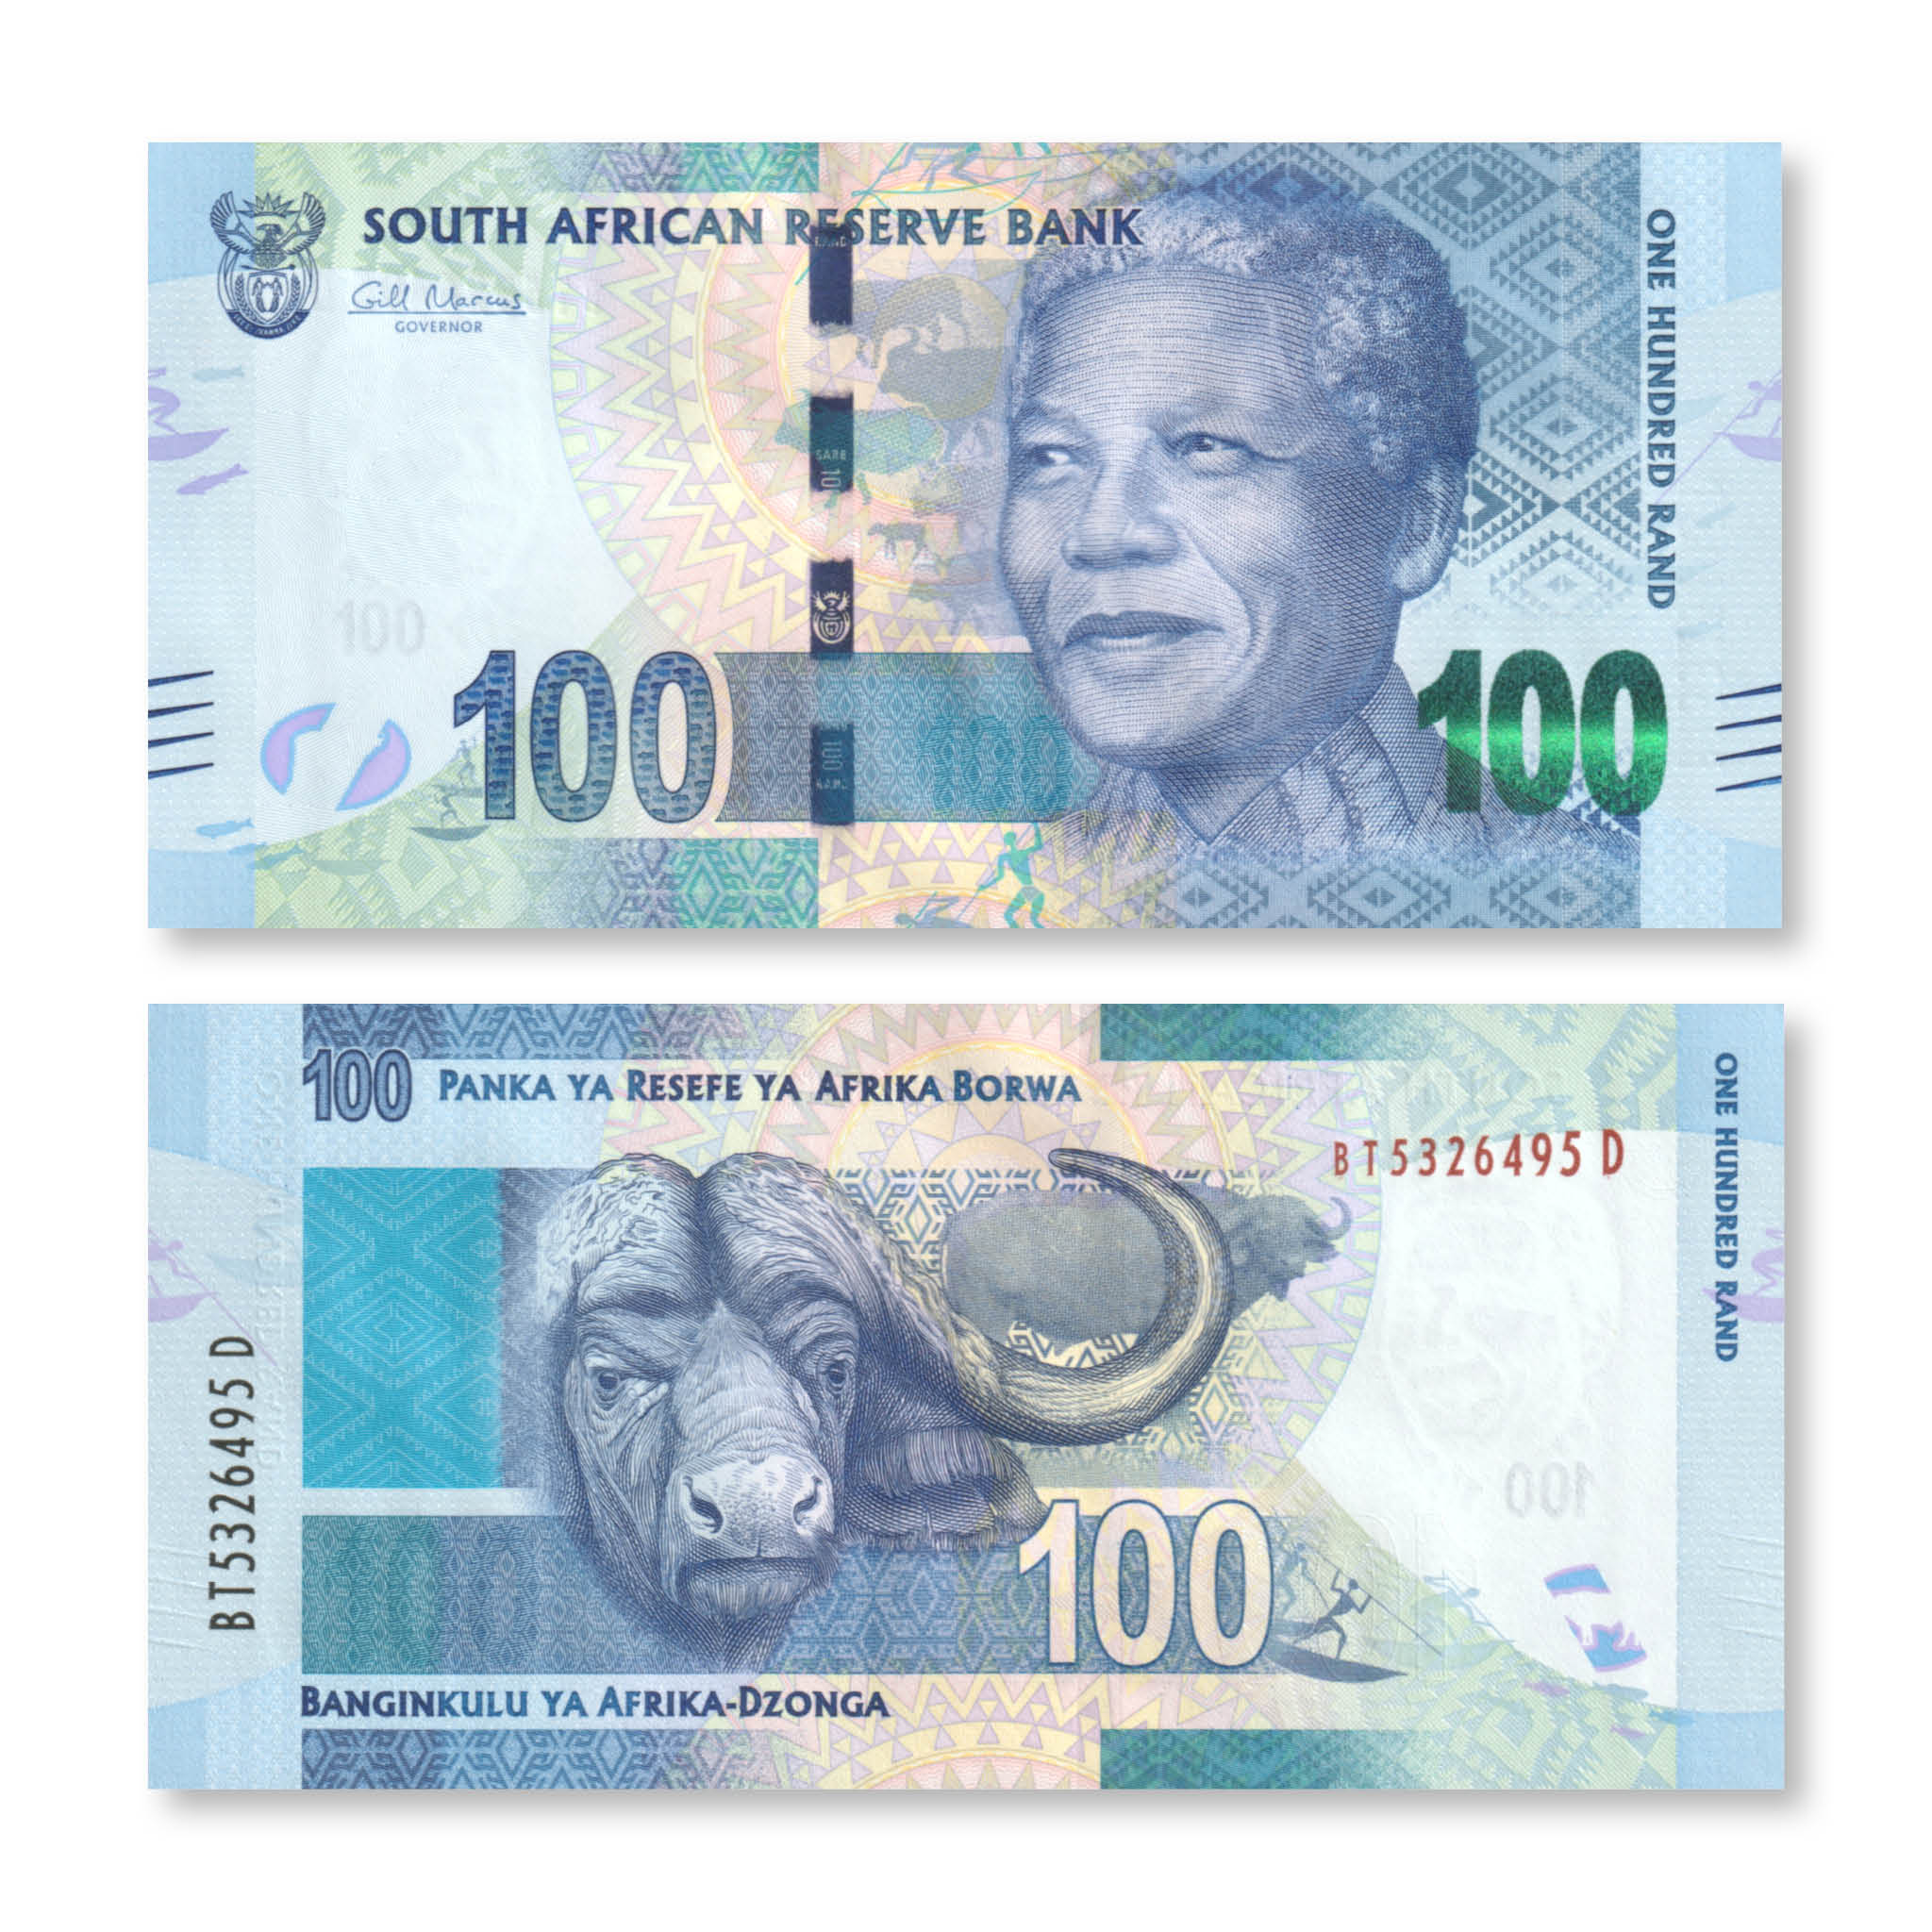 South Africa 100 Rand, 2012, B765a, P136, UNC - Robert's World Money - World Banknotes